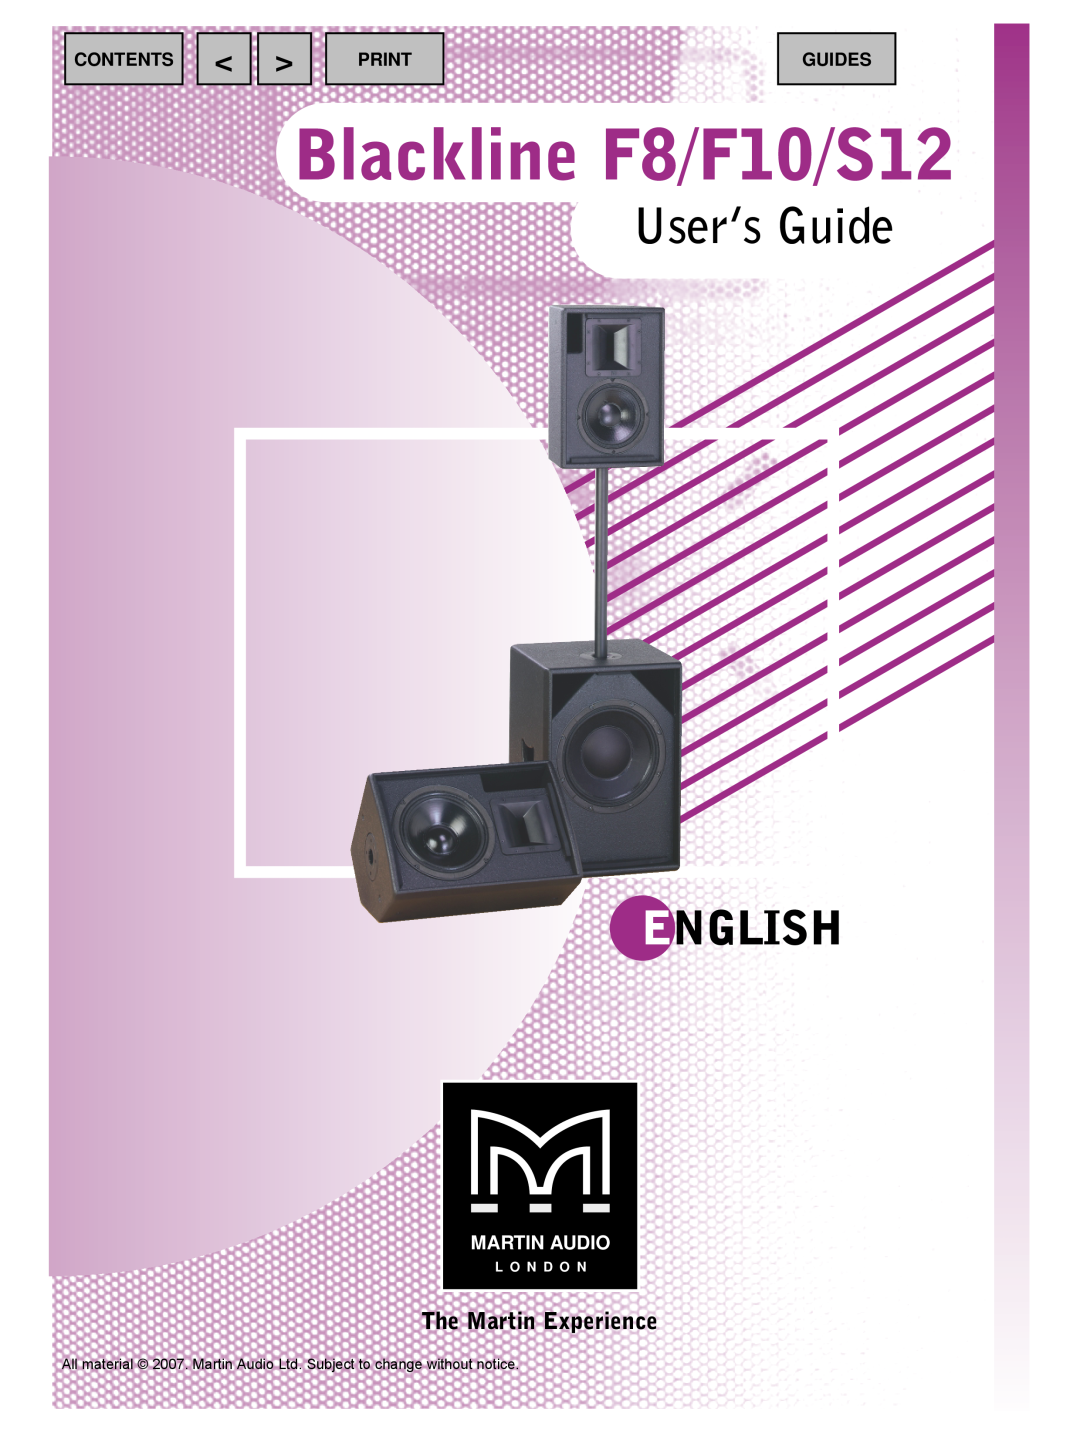 Martin Audio Blackline F8/F10/S12, User’s Guide, English, The Martin Experience, Martin Audio, Contents, Print, Guides 